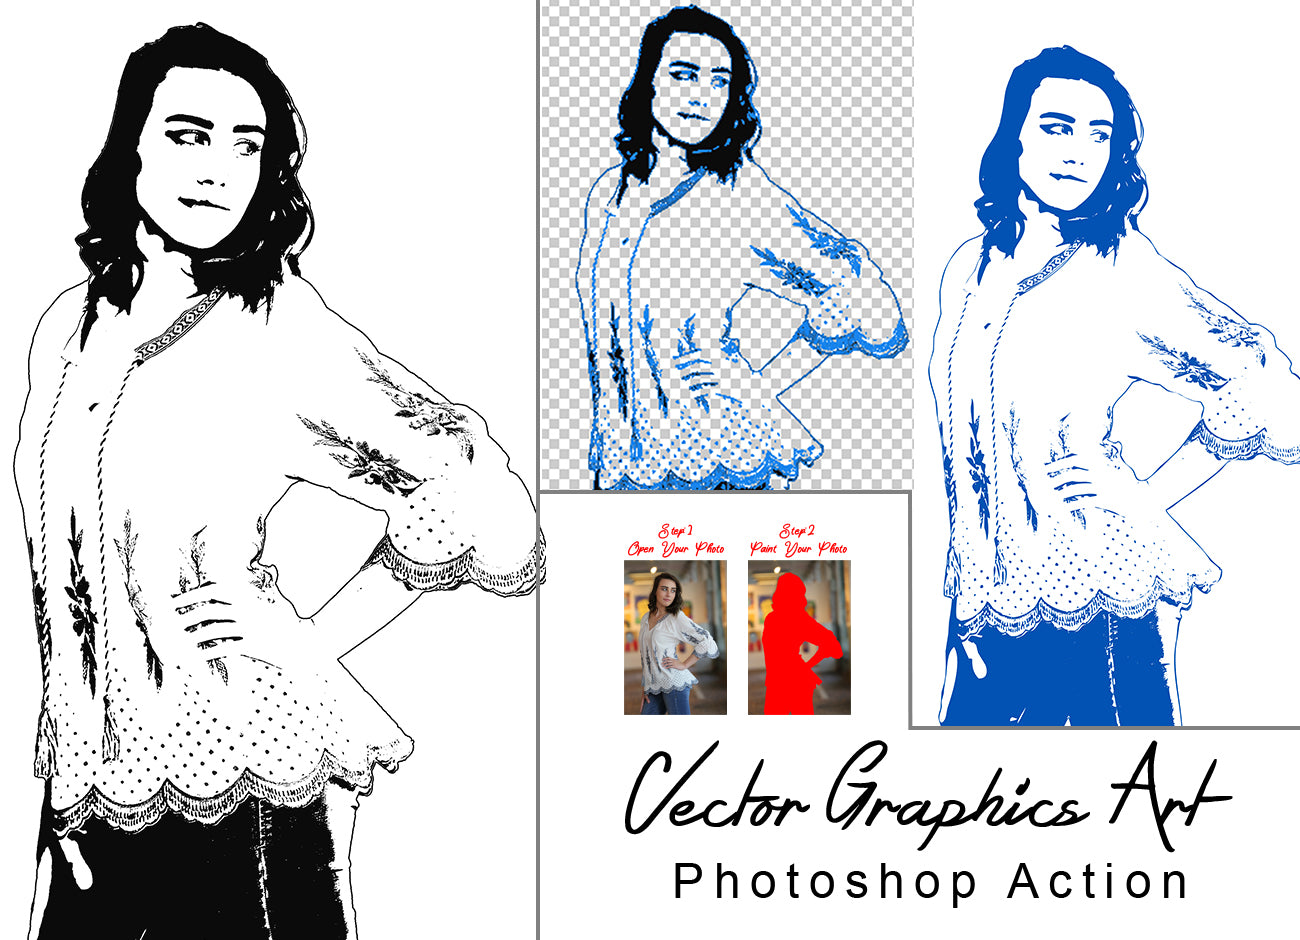 12-In-1 Super Art Photoshop Actions Bundle - Artixty